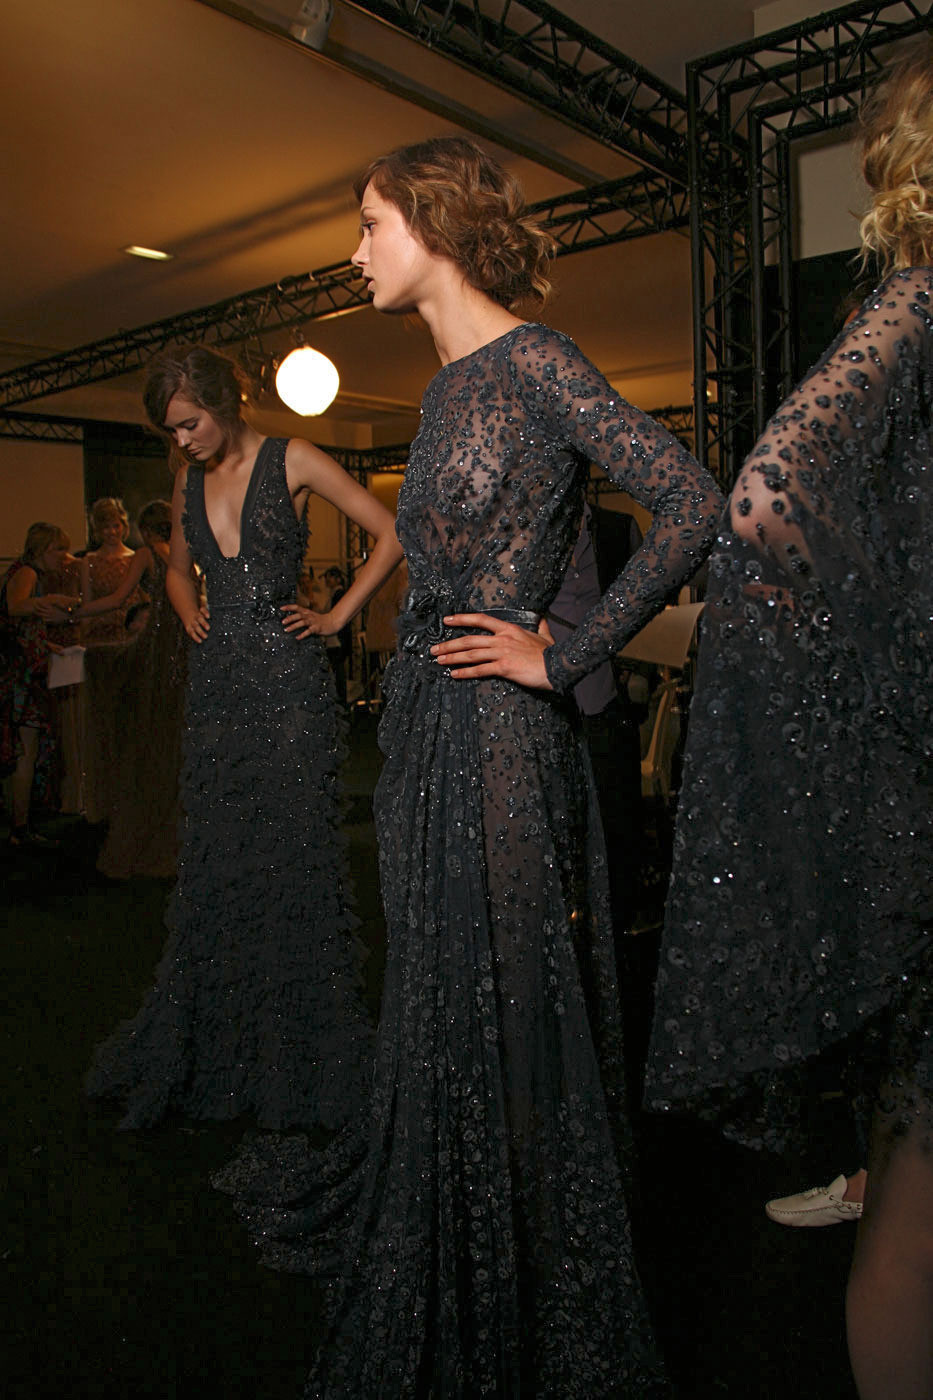 girlannachronism: Elie Saab fall 2011 couture backstage